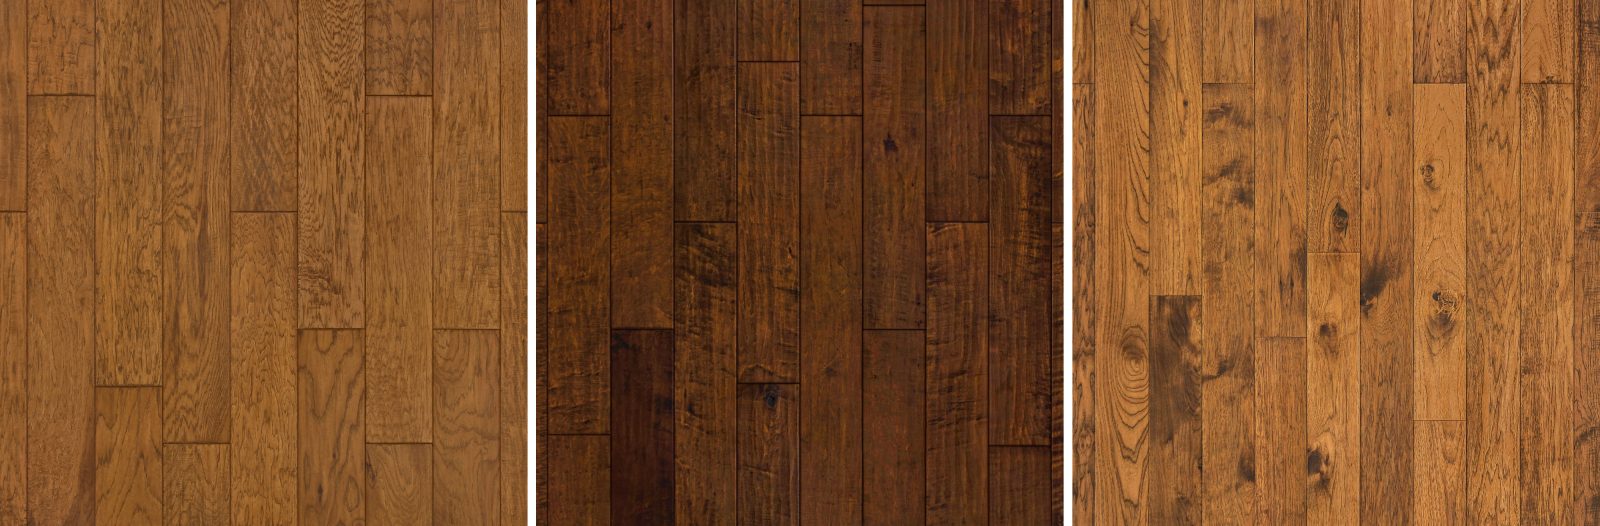 Comparison of Hickory Hardwood Flooring